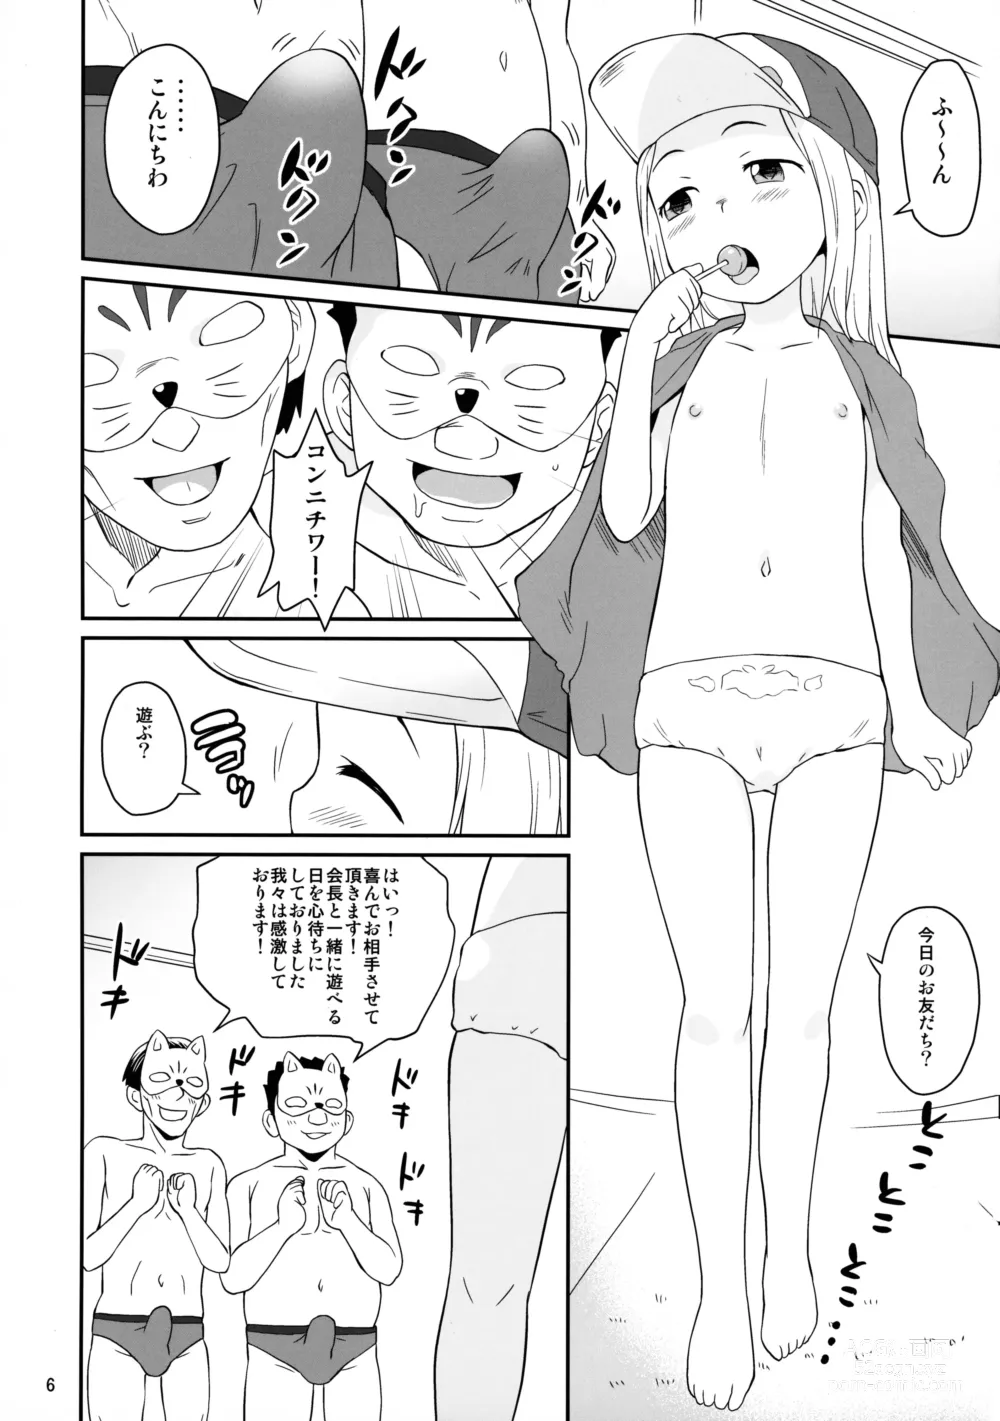 Page 6 of doujinshi Otomodachi Kai